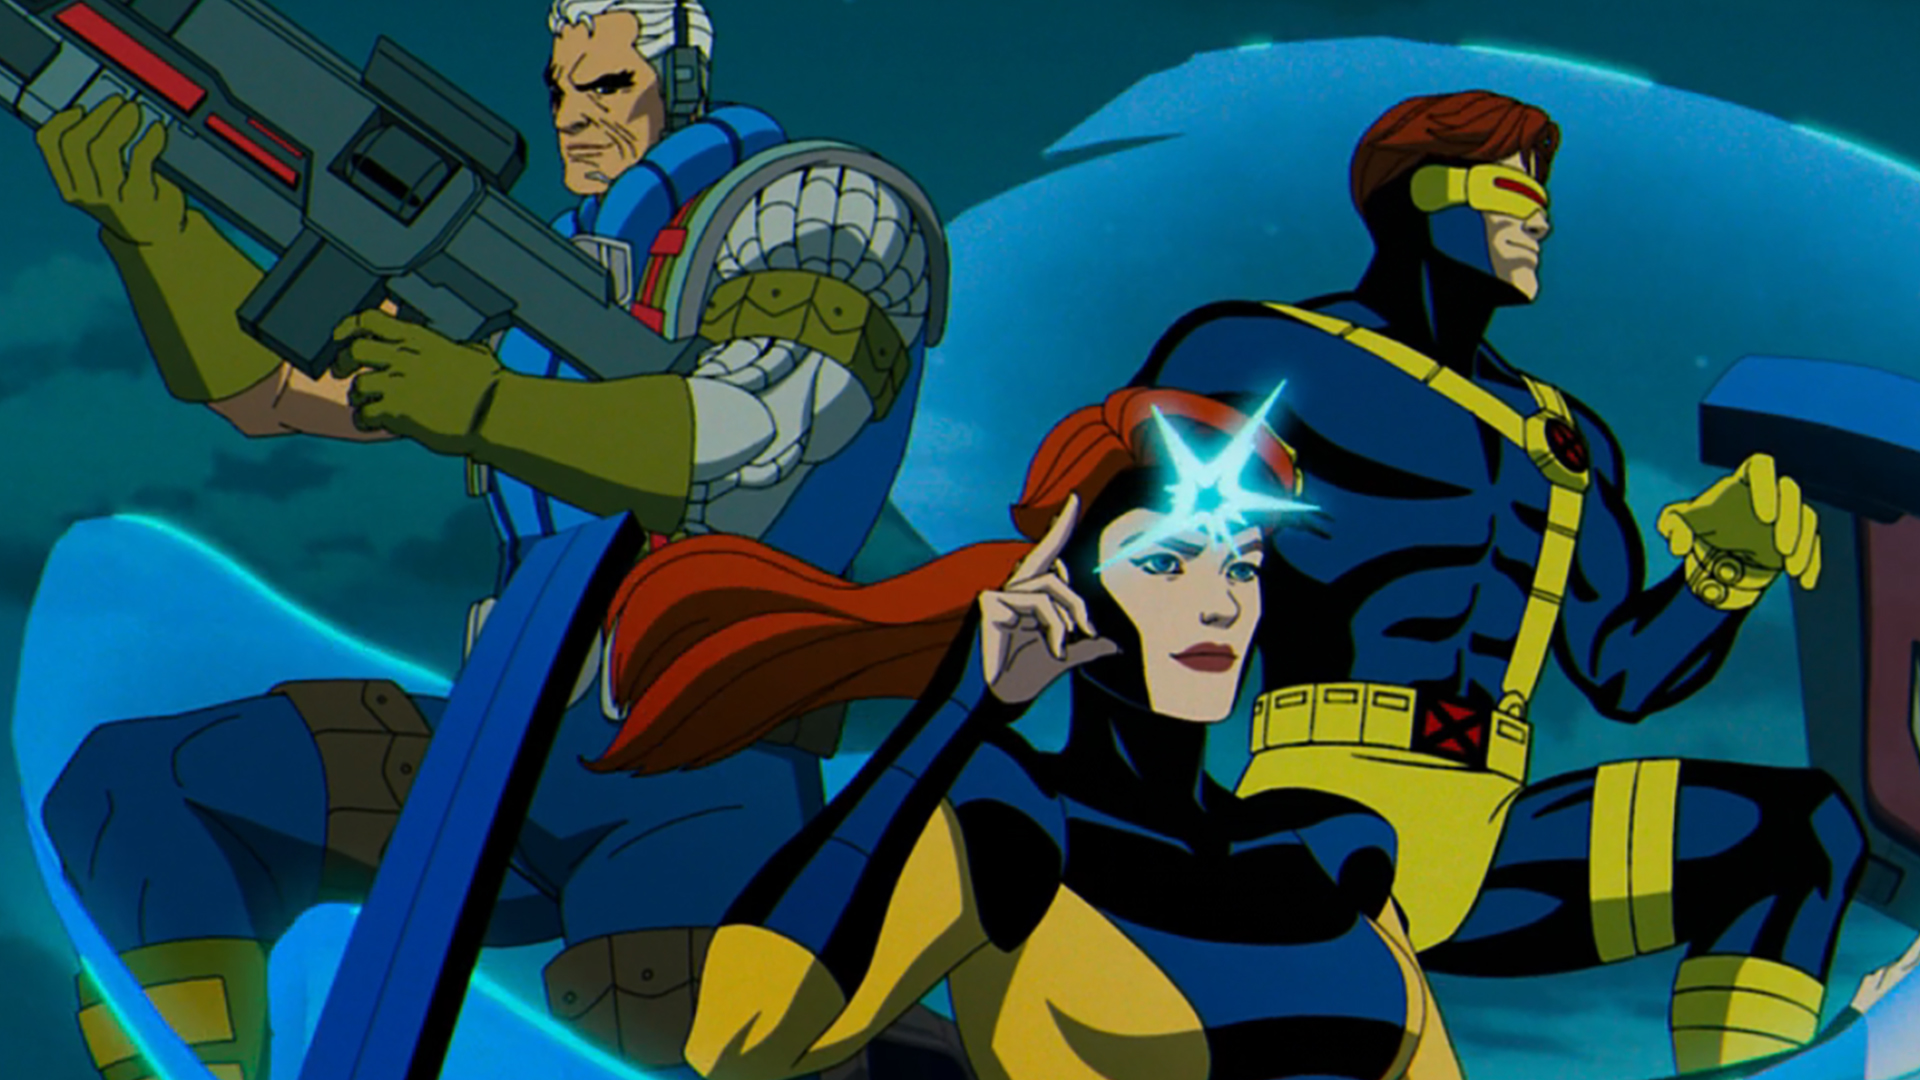 X-Men '97 episode 8 still